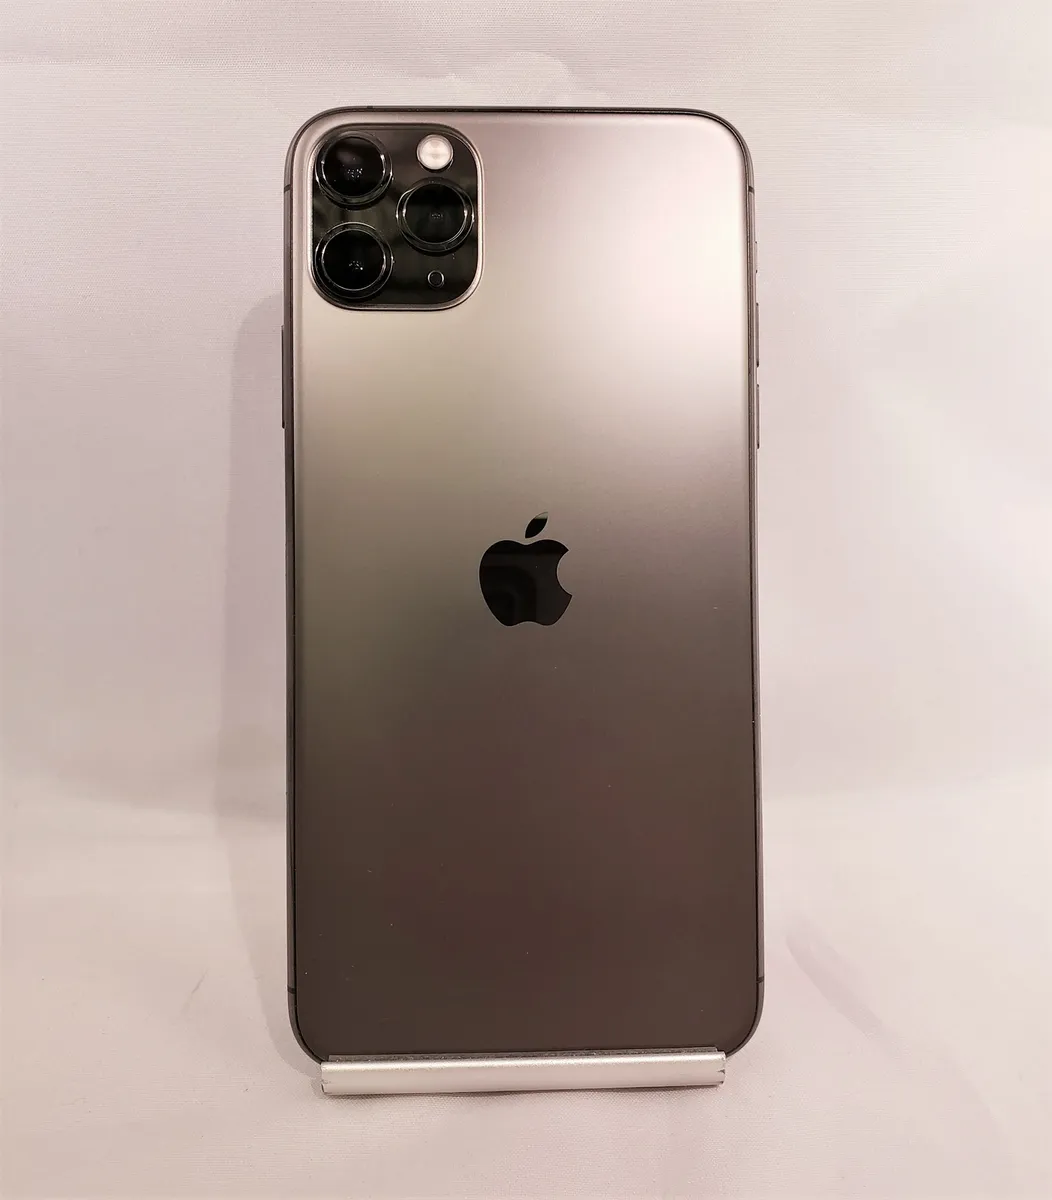 Apple iPhone 11 Pro Max 256GB Space Gray Unlocked Fair Condition